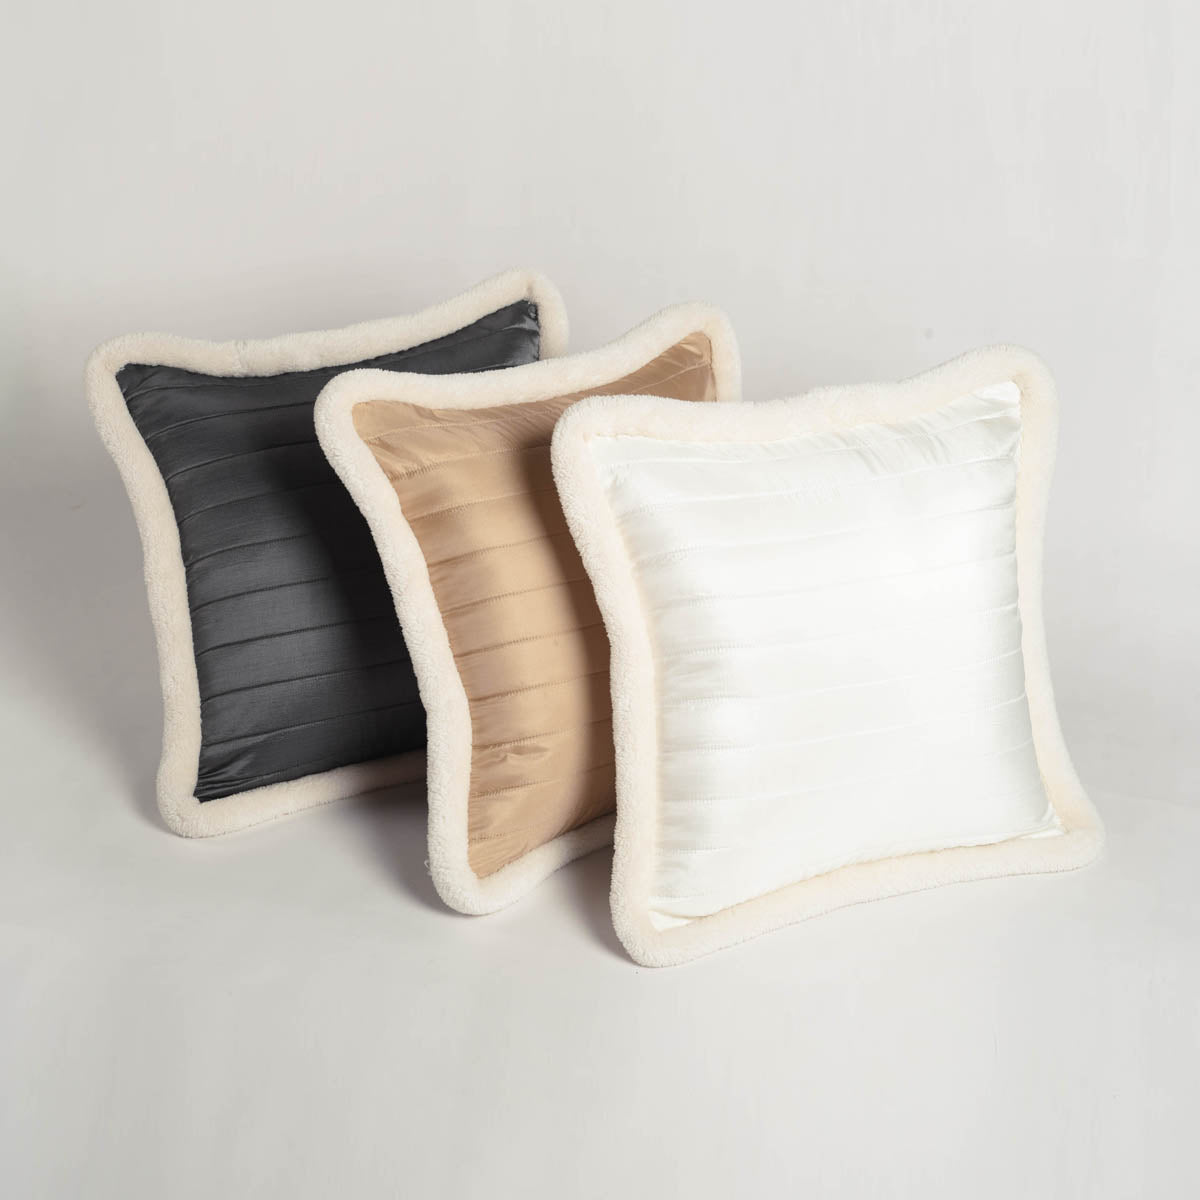 Svenska - Beige cushion cover, quilted pillow cover, scandinavian pillow